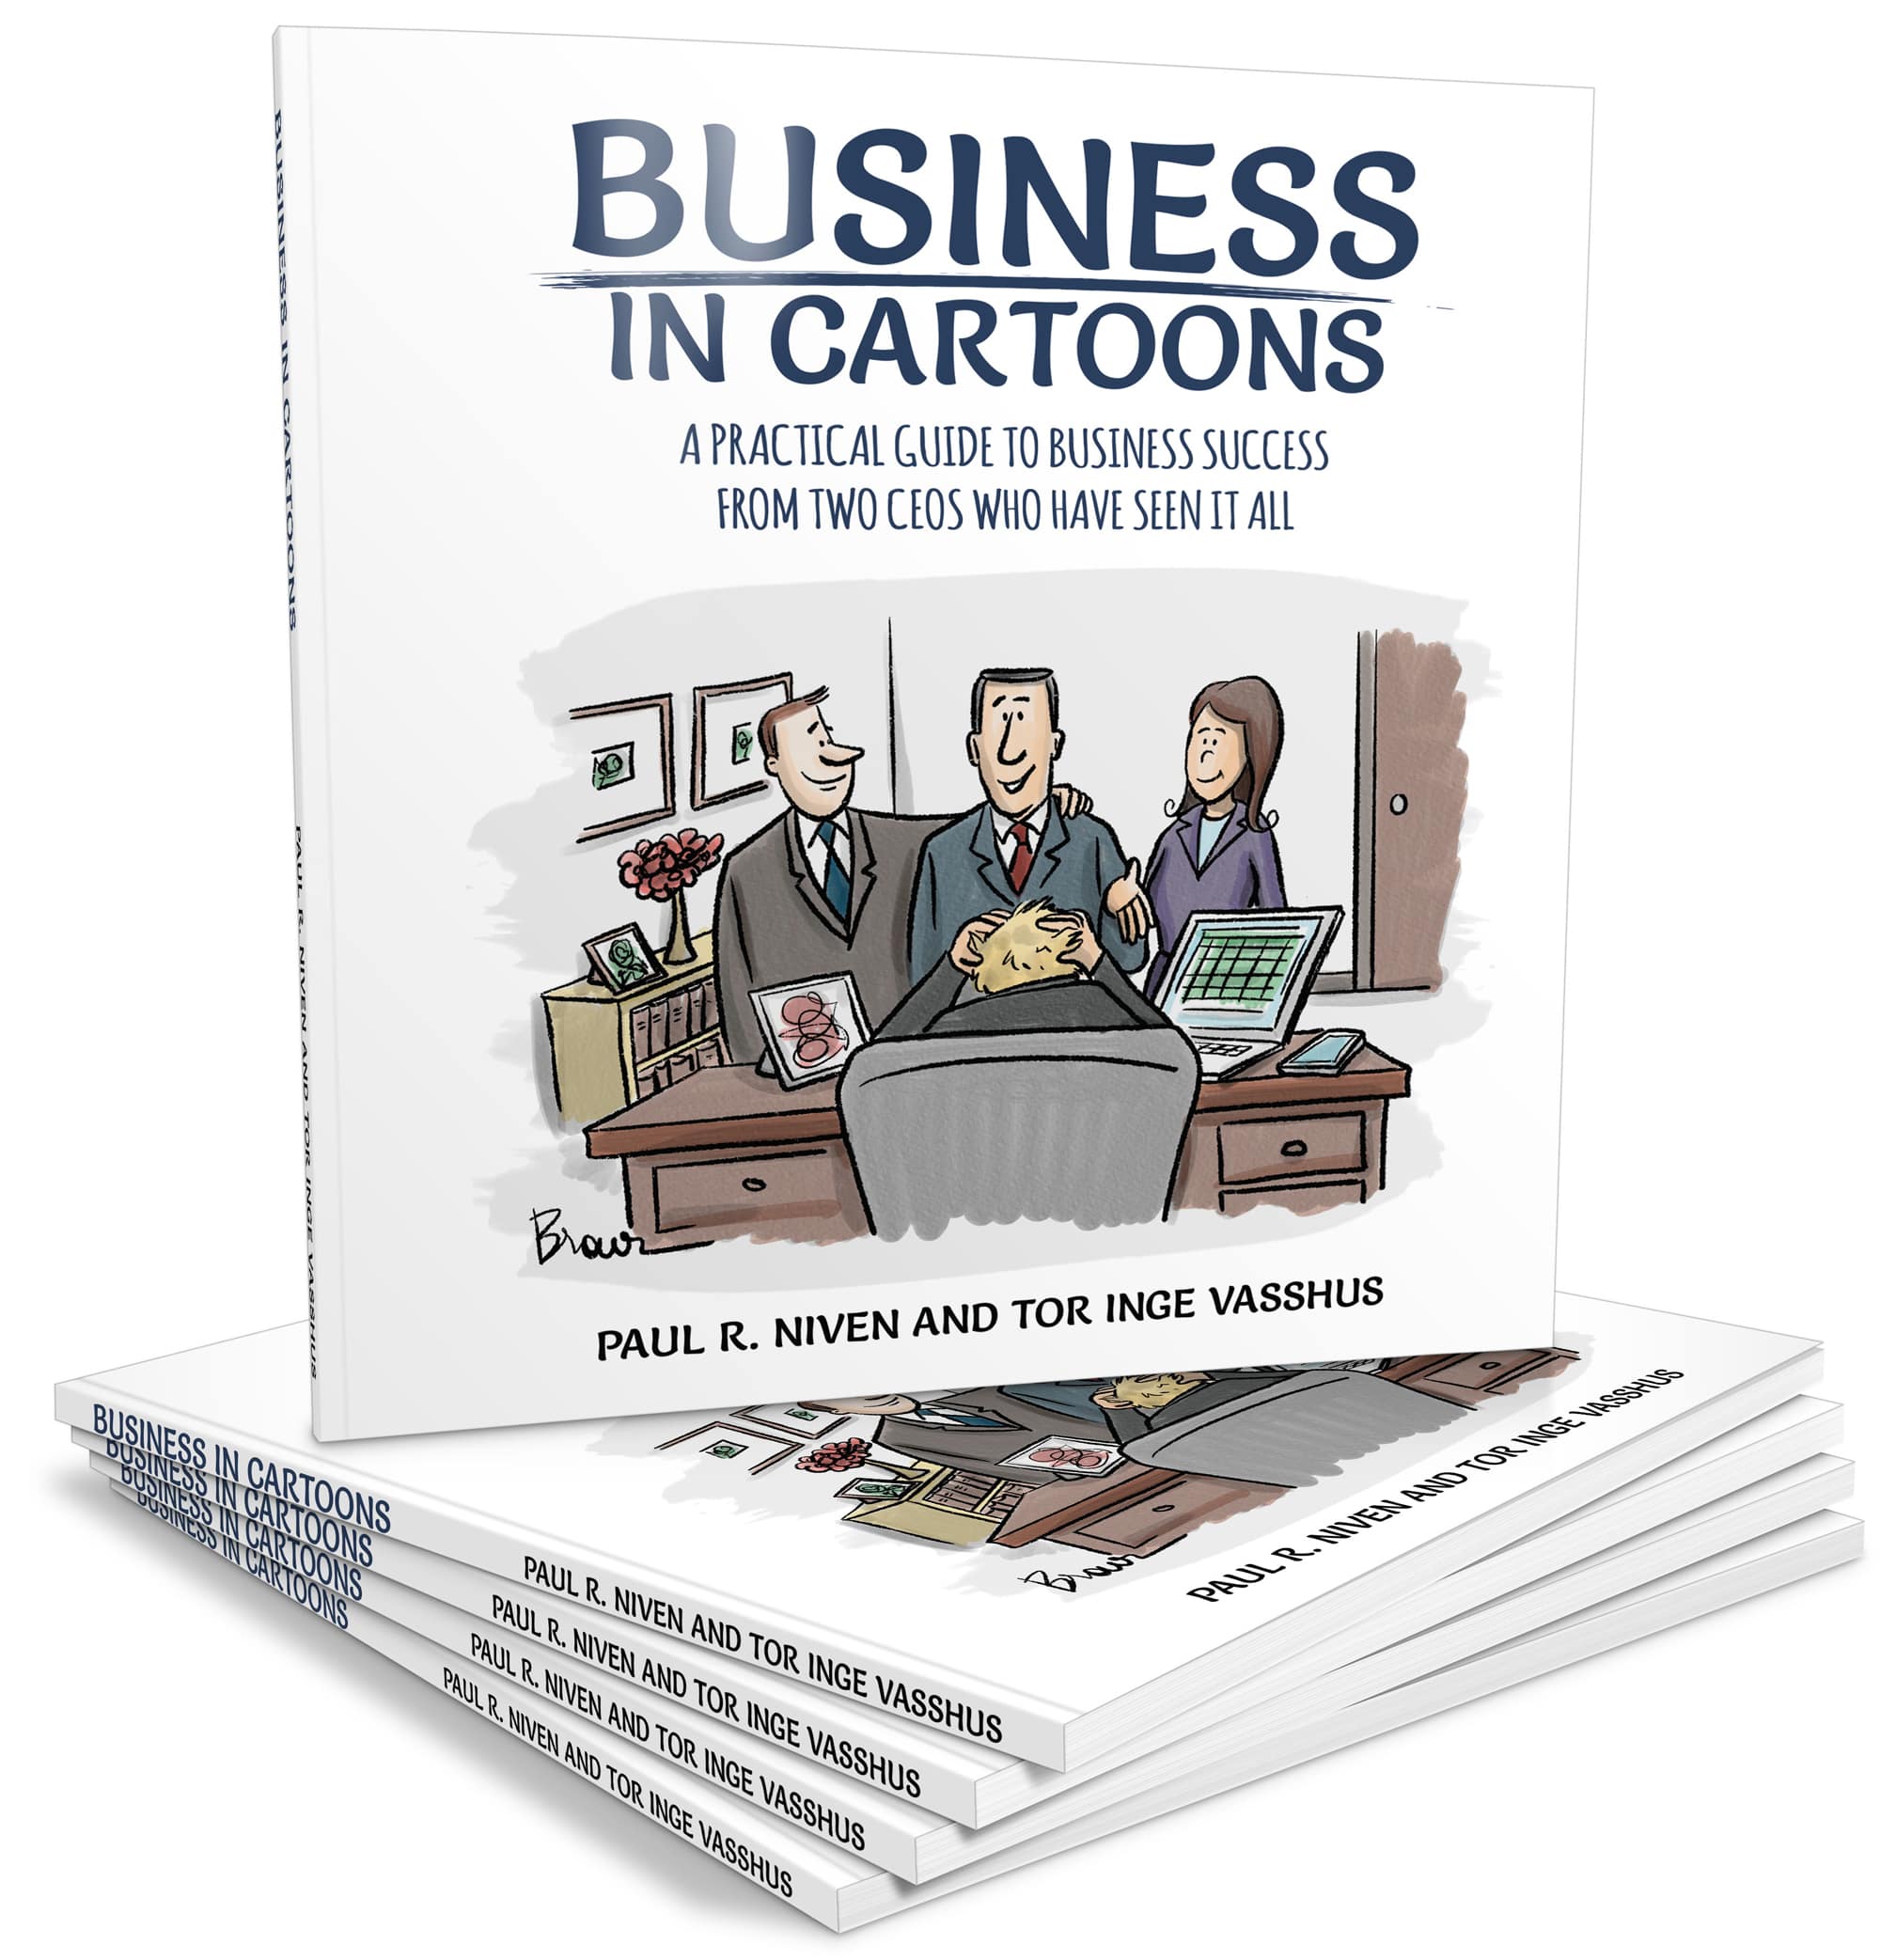 Business in Cartoons | Download eBook | Corporater